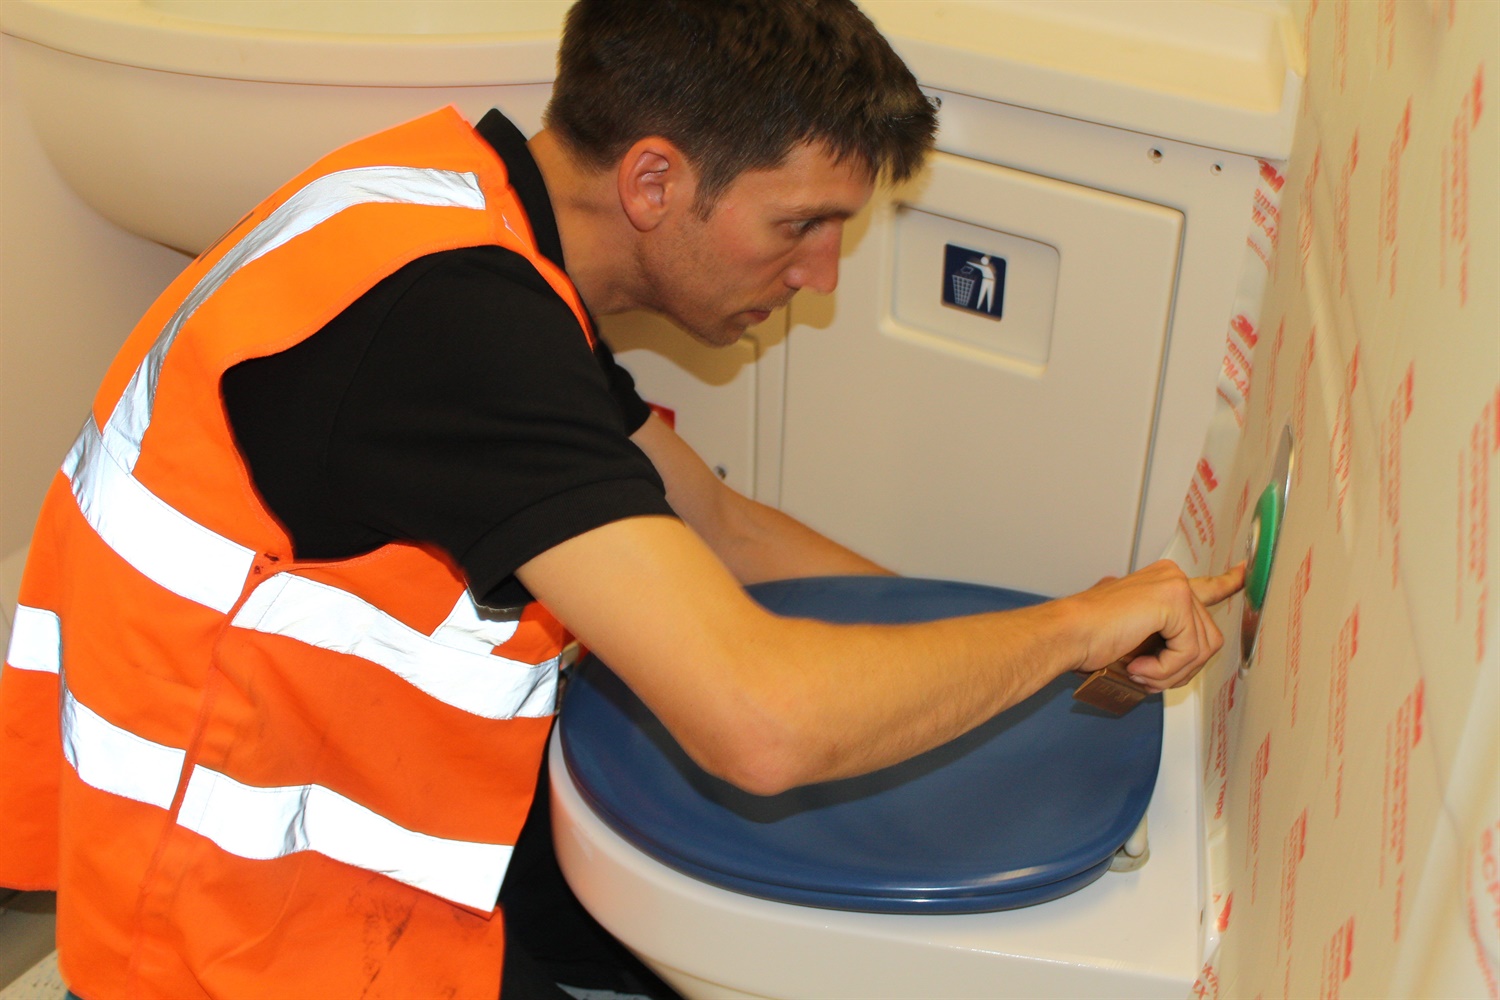 Worker refurbishing and putting screen prints on Class 375 train toilet